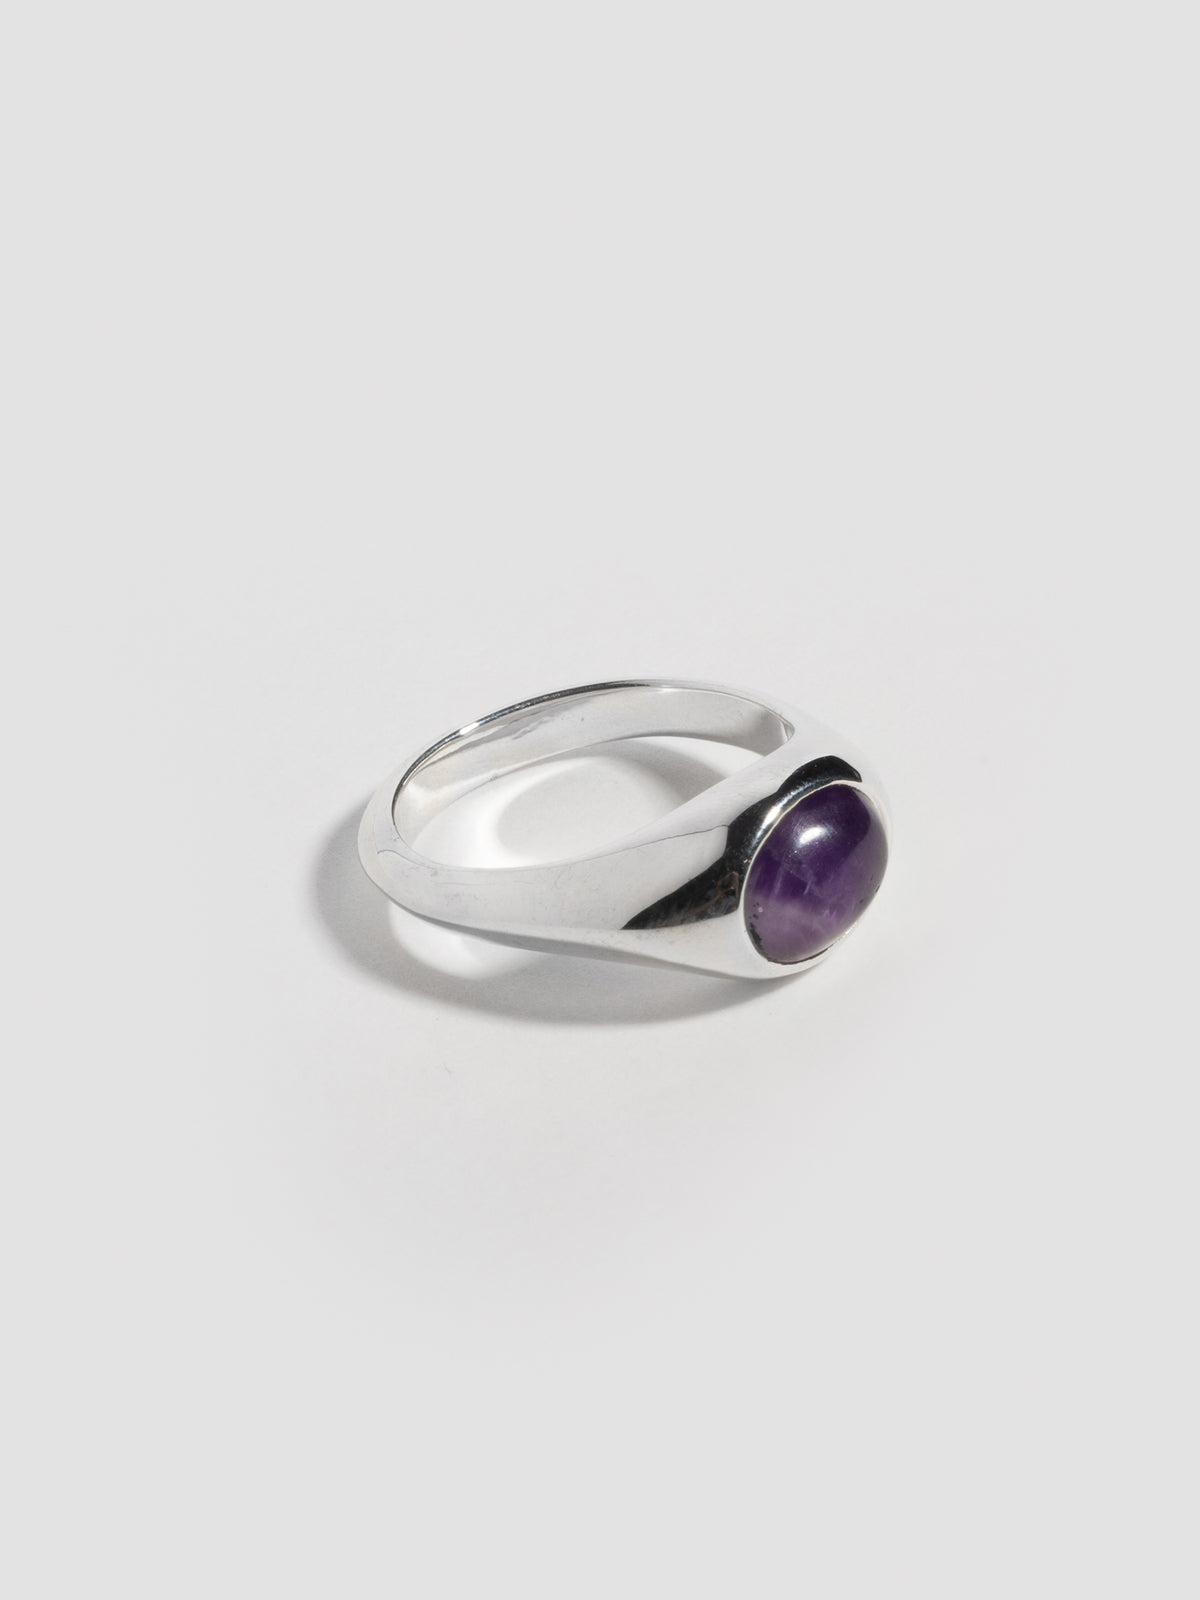 FARIS EYE Ring in sterling silver with purple amethyst